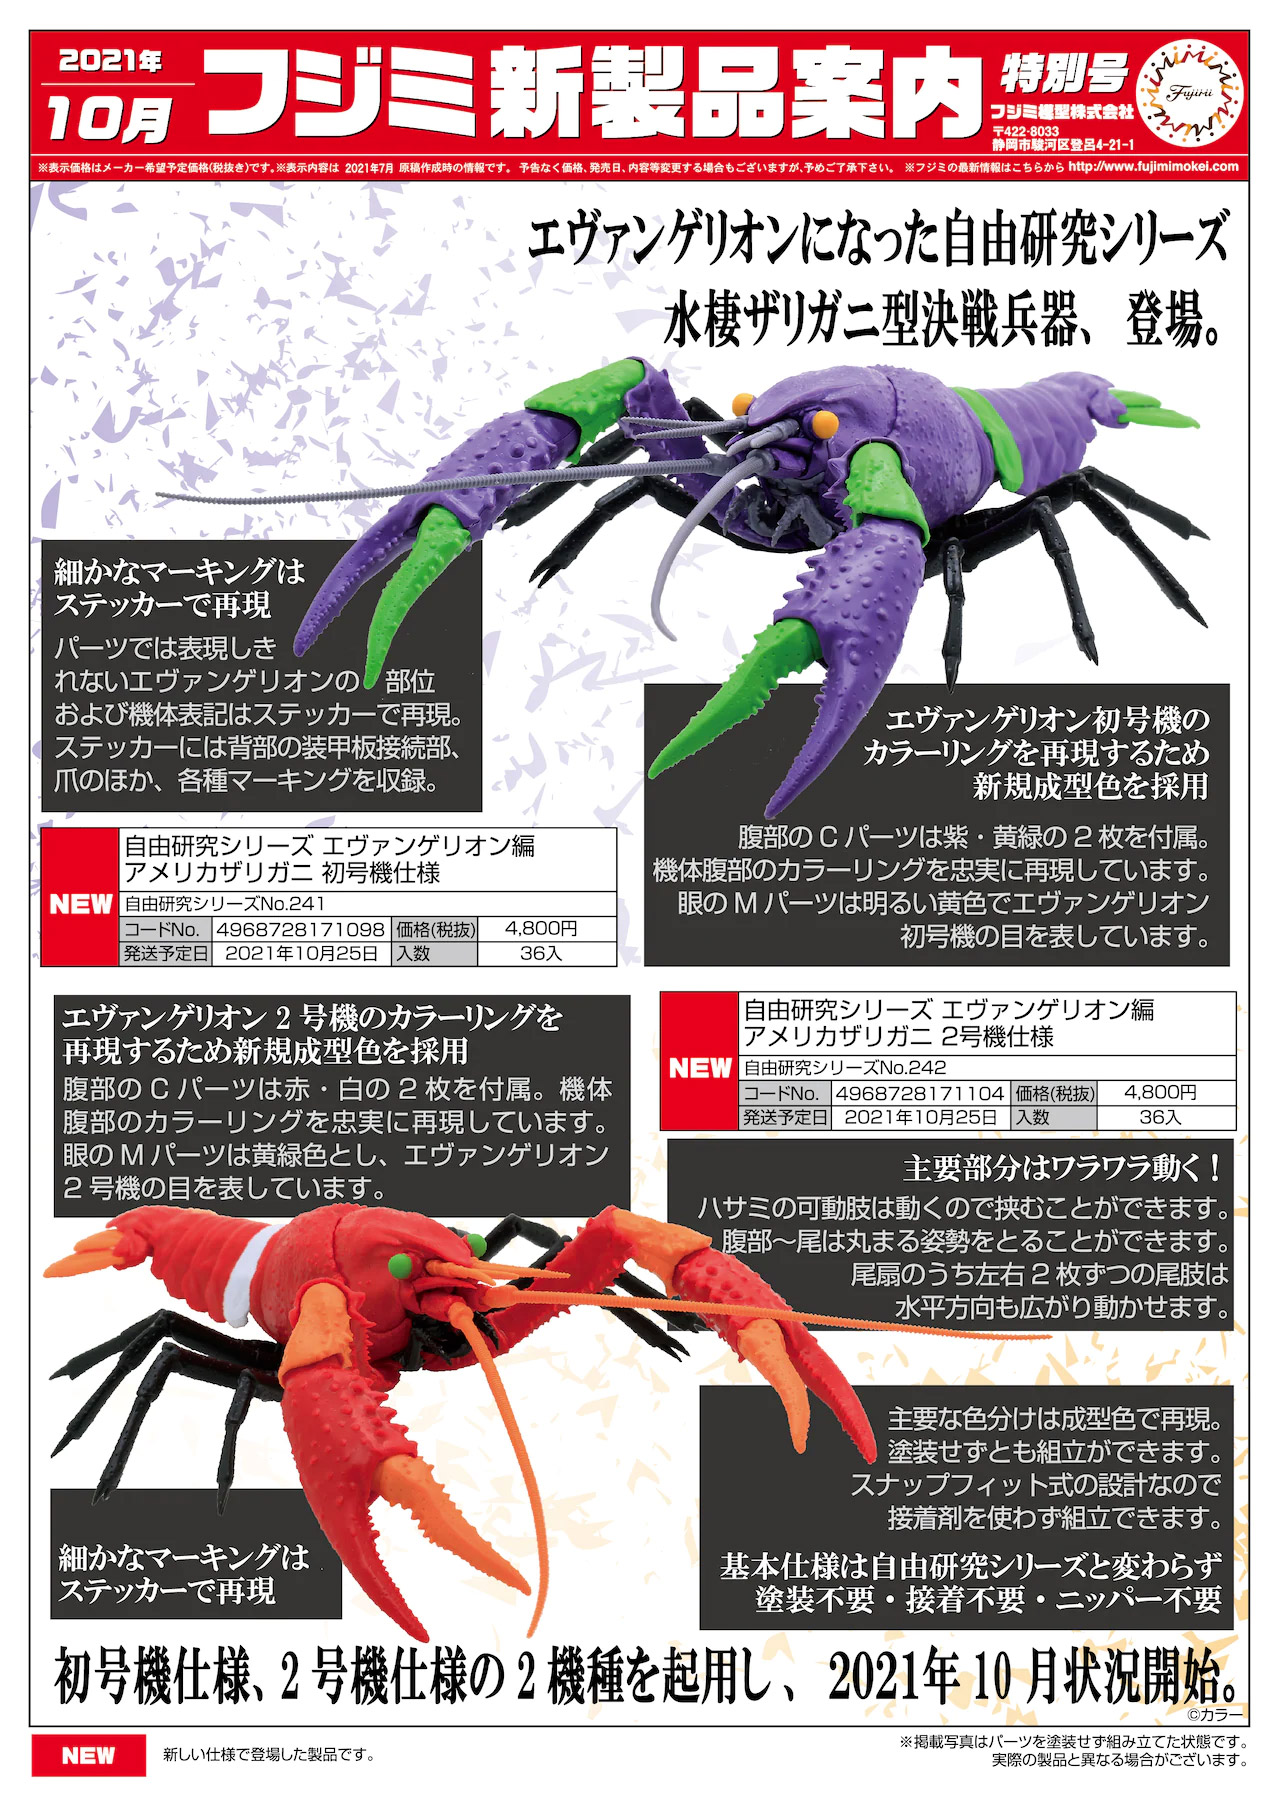 Catsuka Official Evangelion Crayfish Figures T Co Lzt4fedpte Evamerchmultiverse